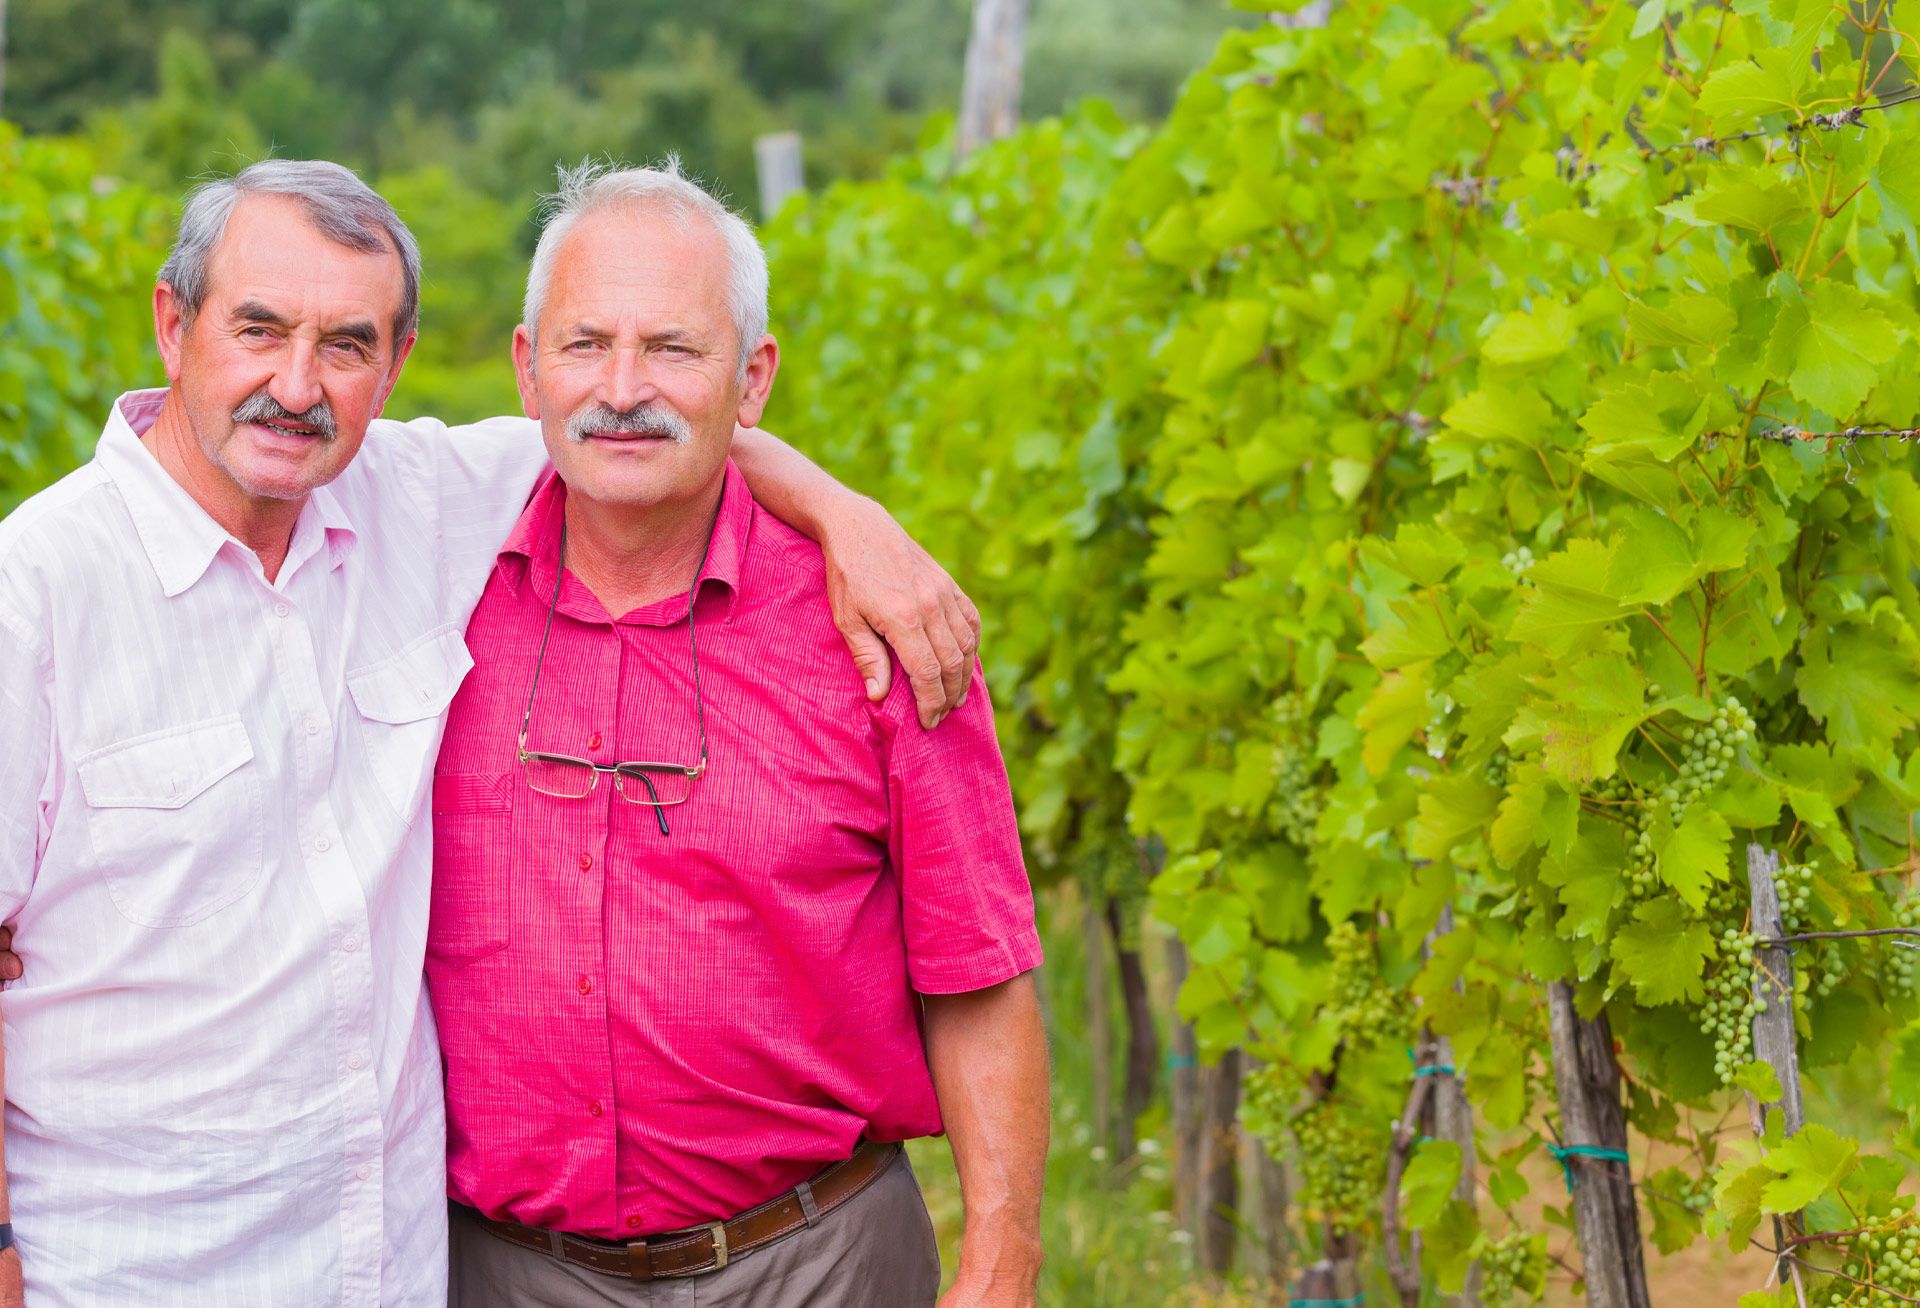 Two older men posing in front of a winery field